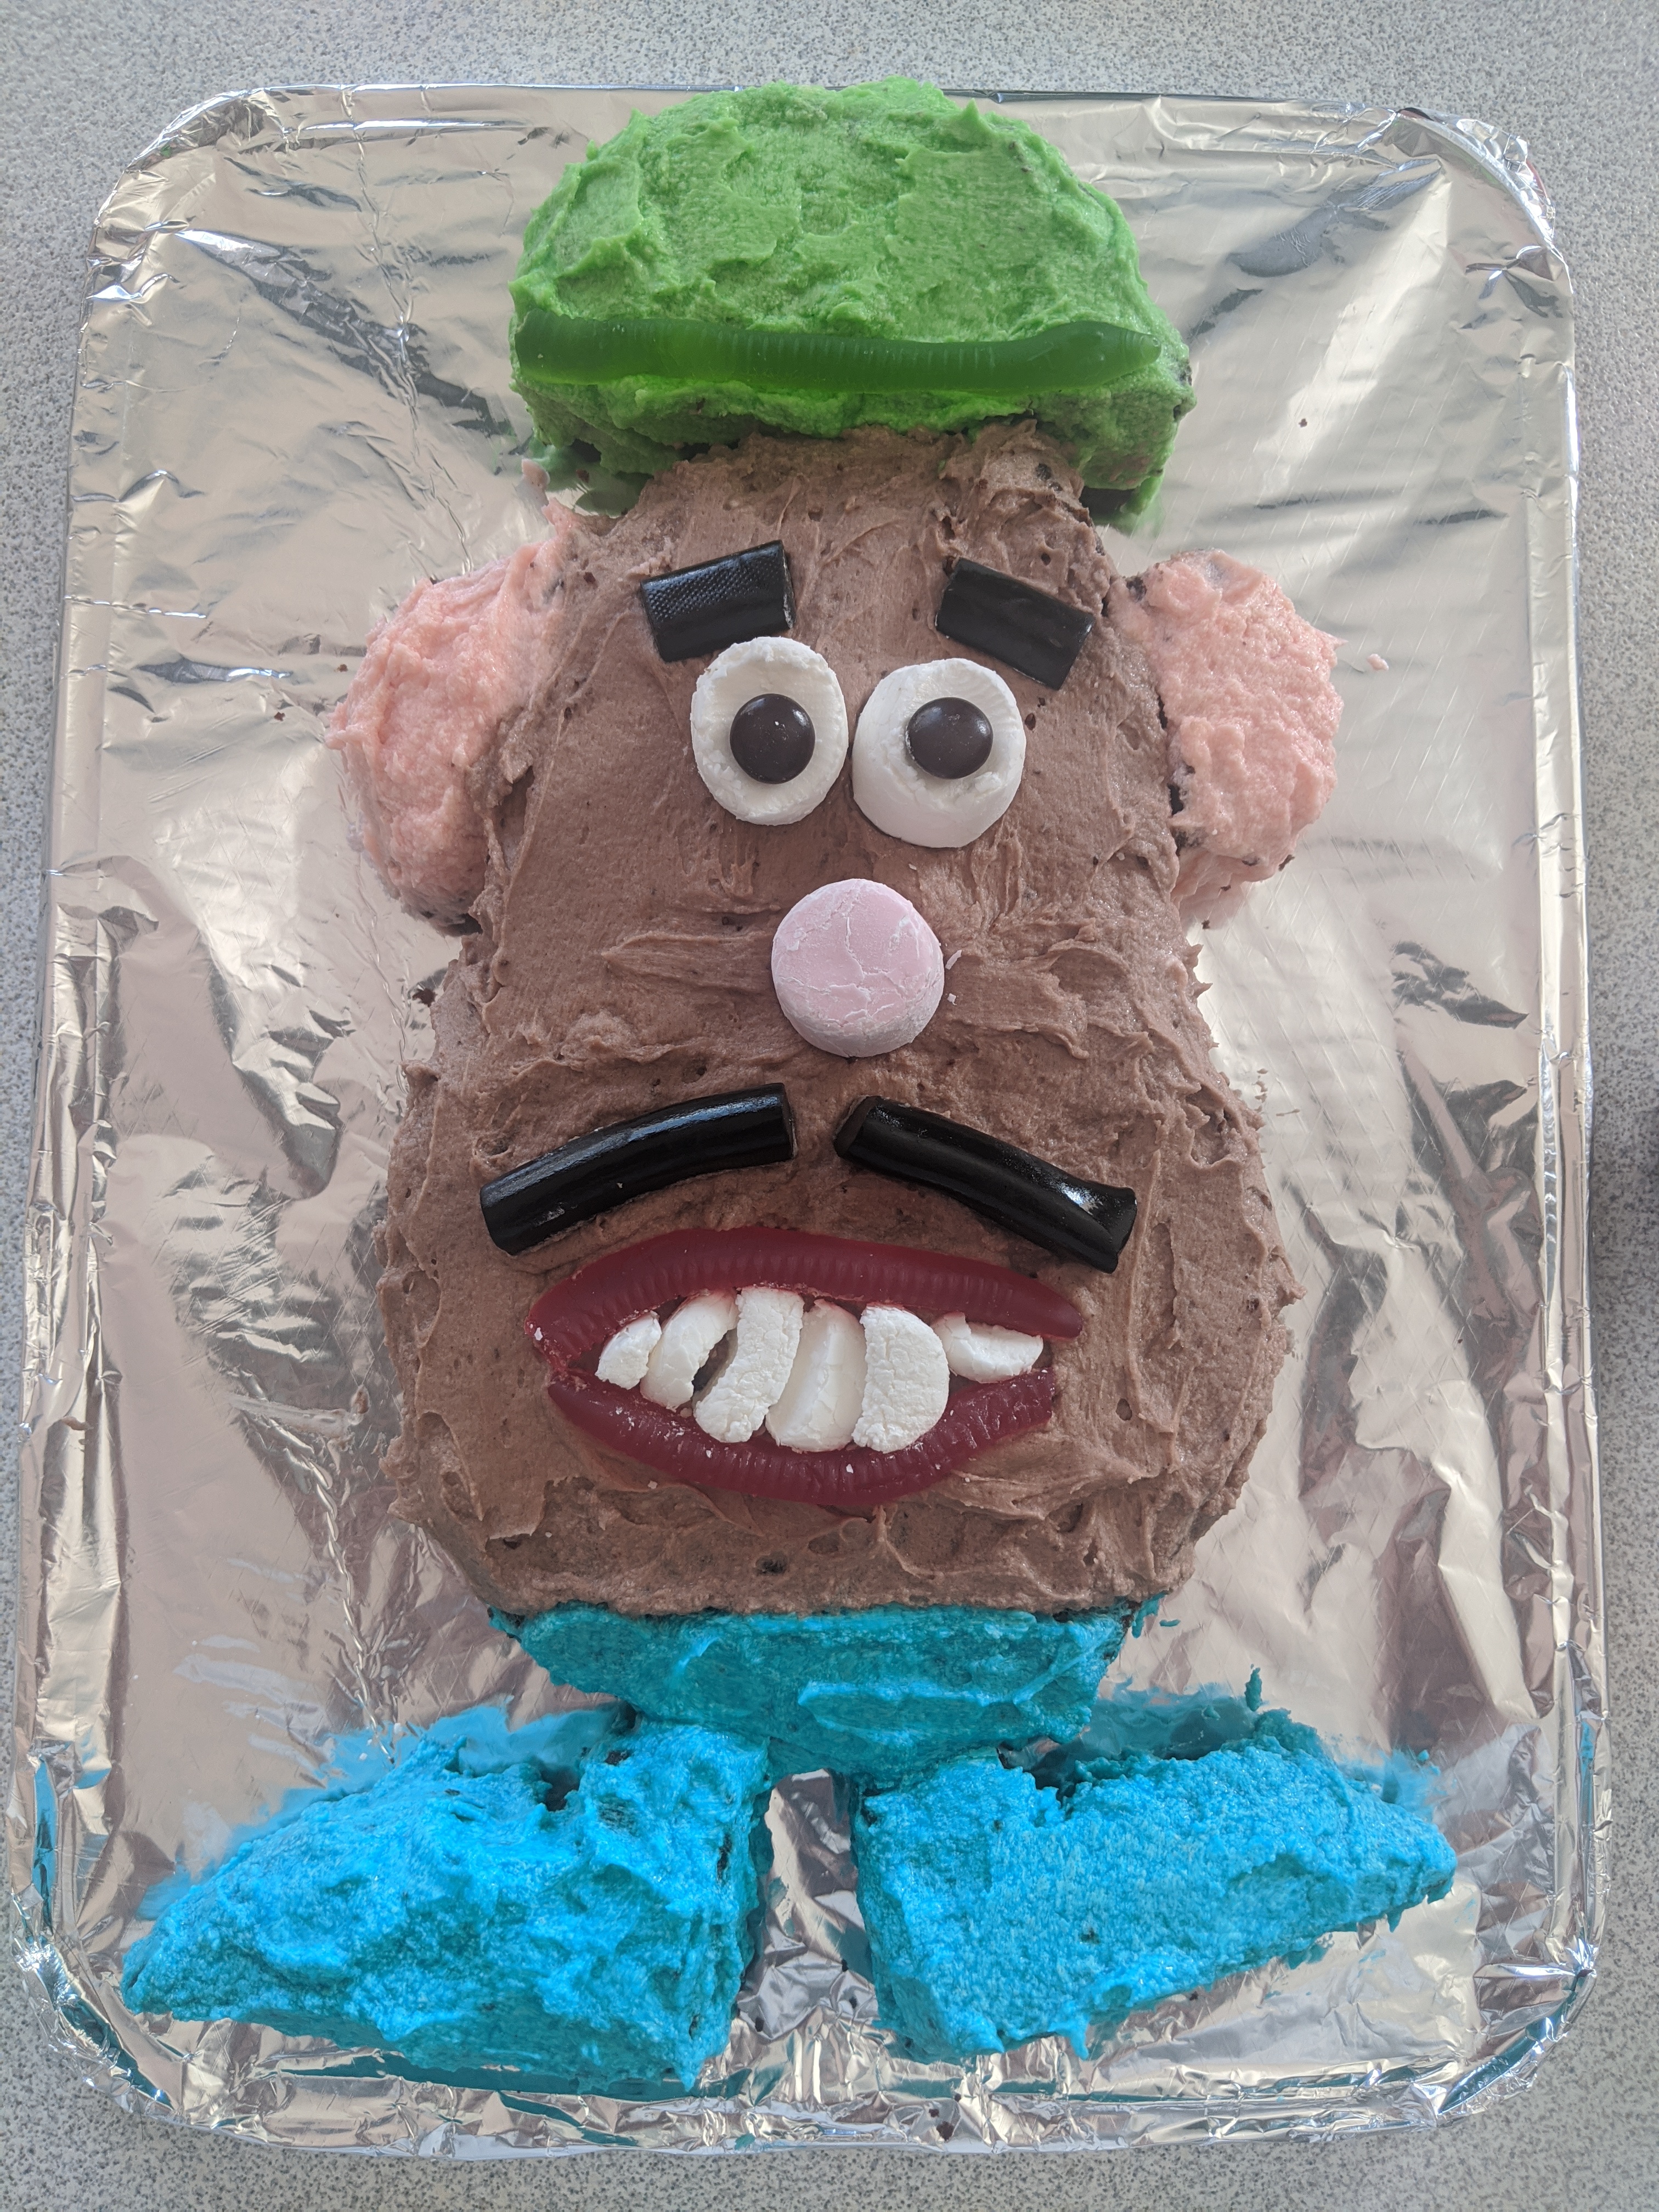 Mr Potato Head Cake